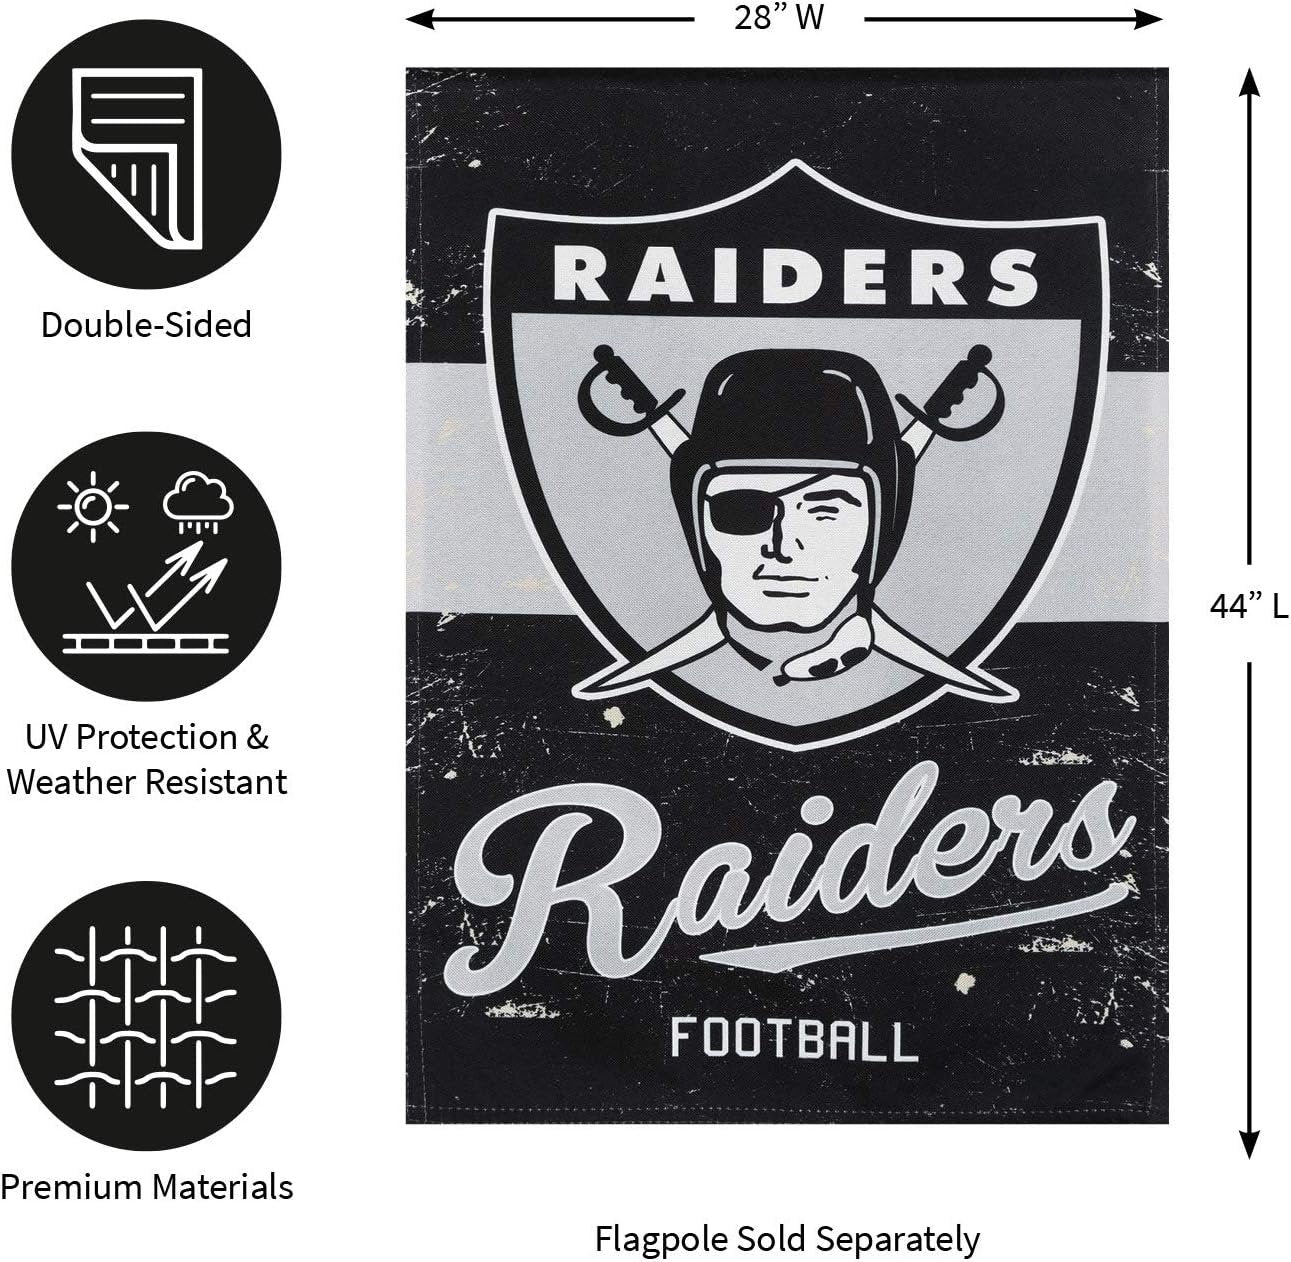 Las Vegas Raiders Premium Double Sided Banner Flag 28x44 Inch Vintage Logo Design Indoor Outdoor